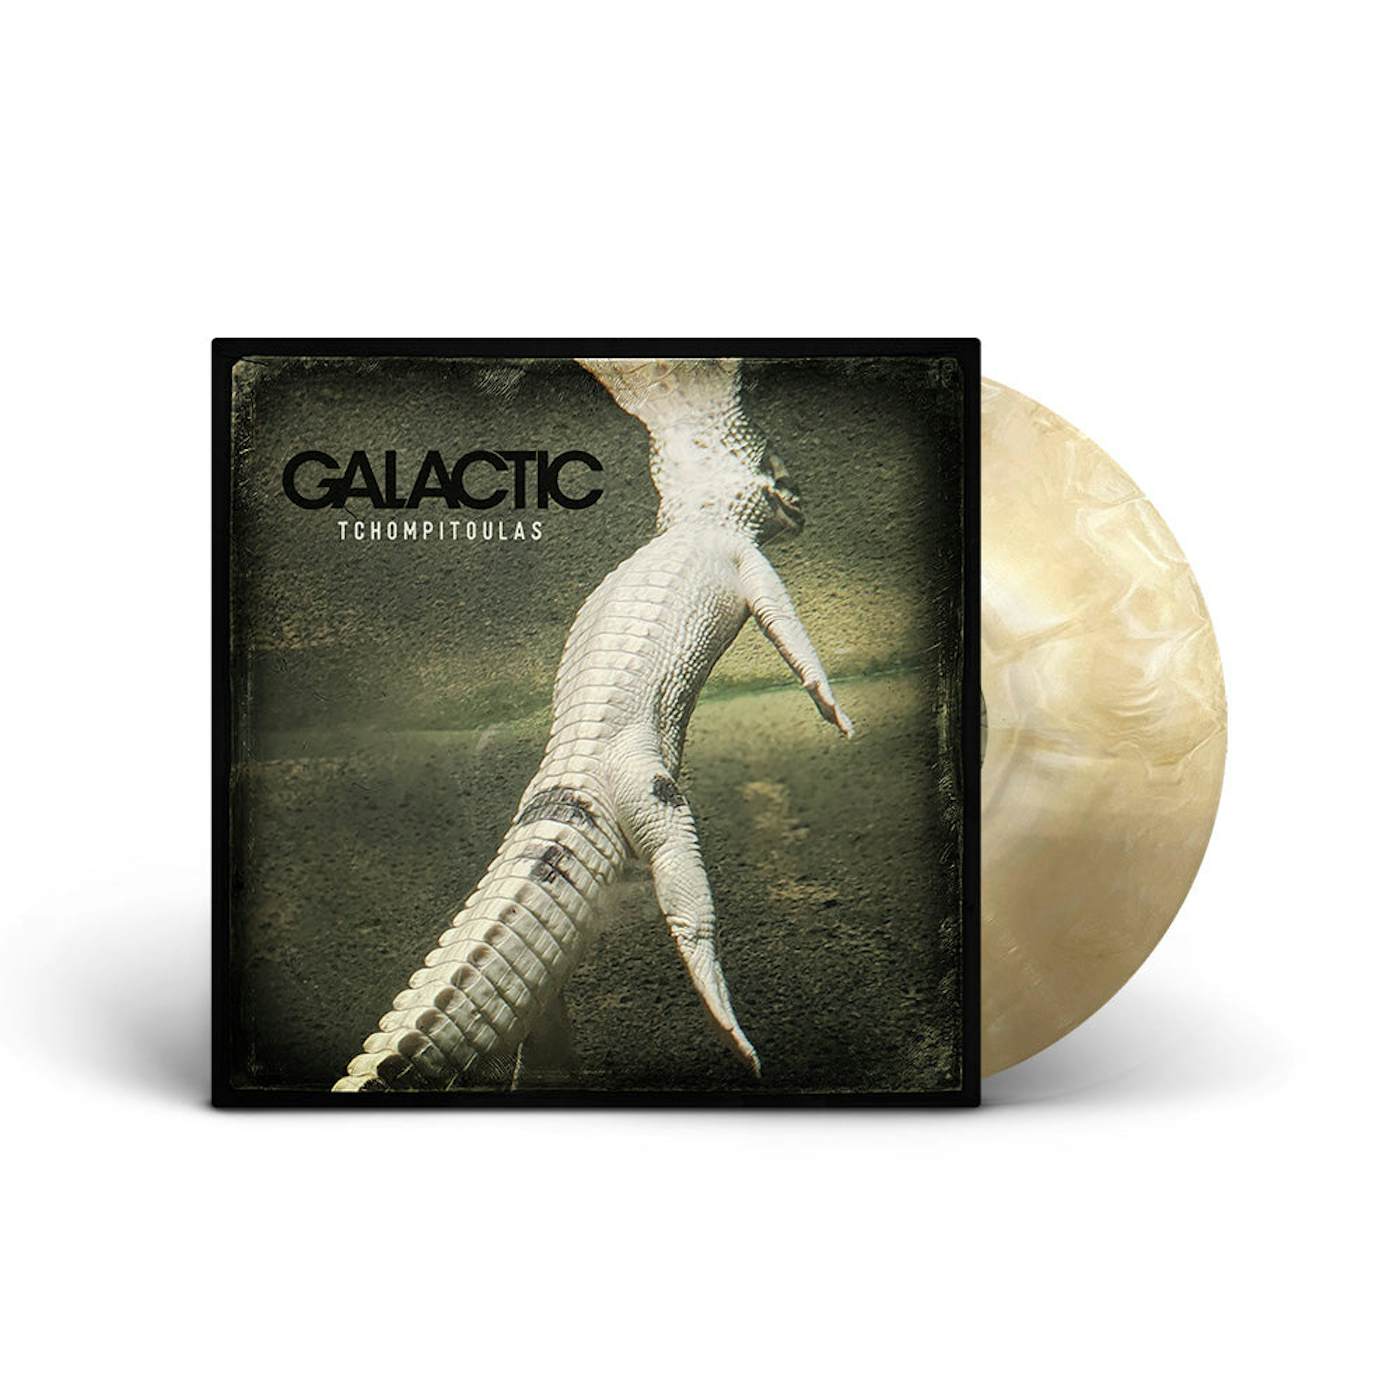 Galactic TCHOMPITOULAS Limited Edition EP Vinyl